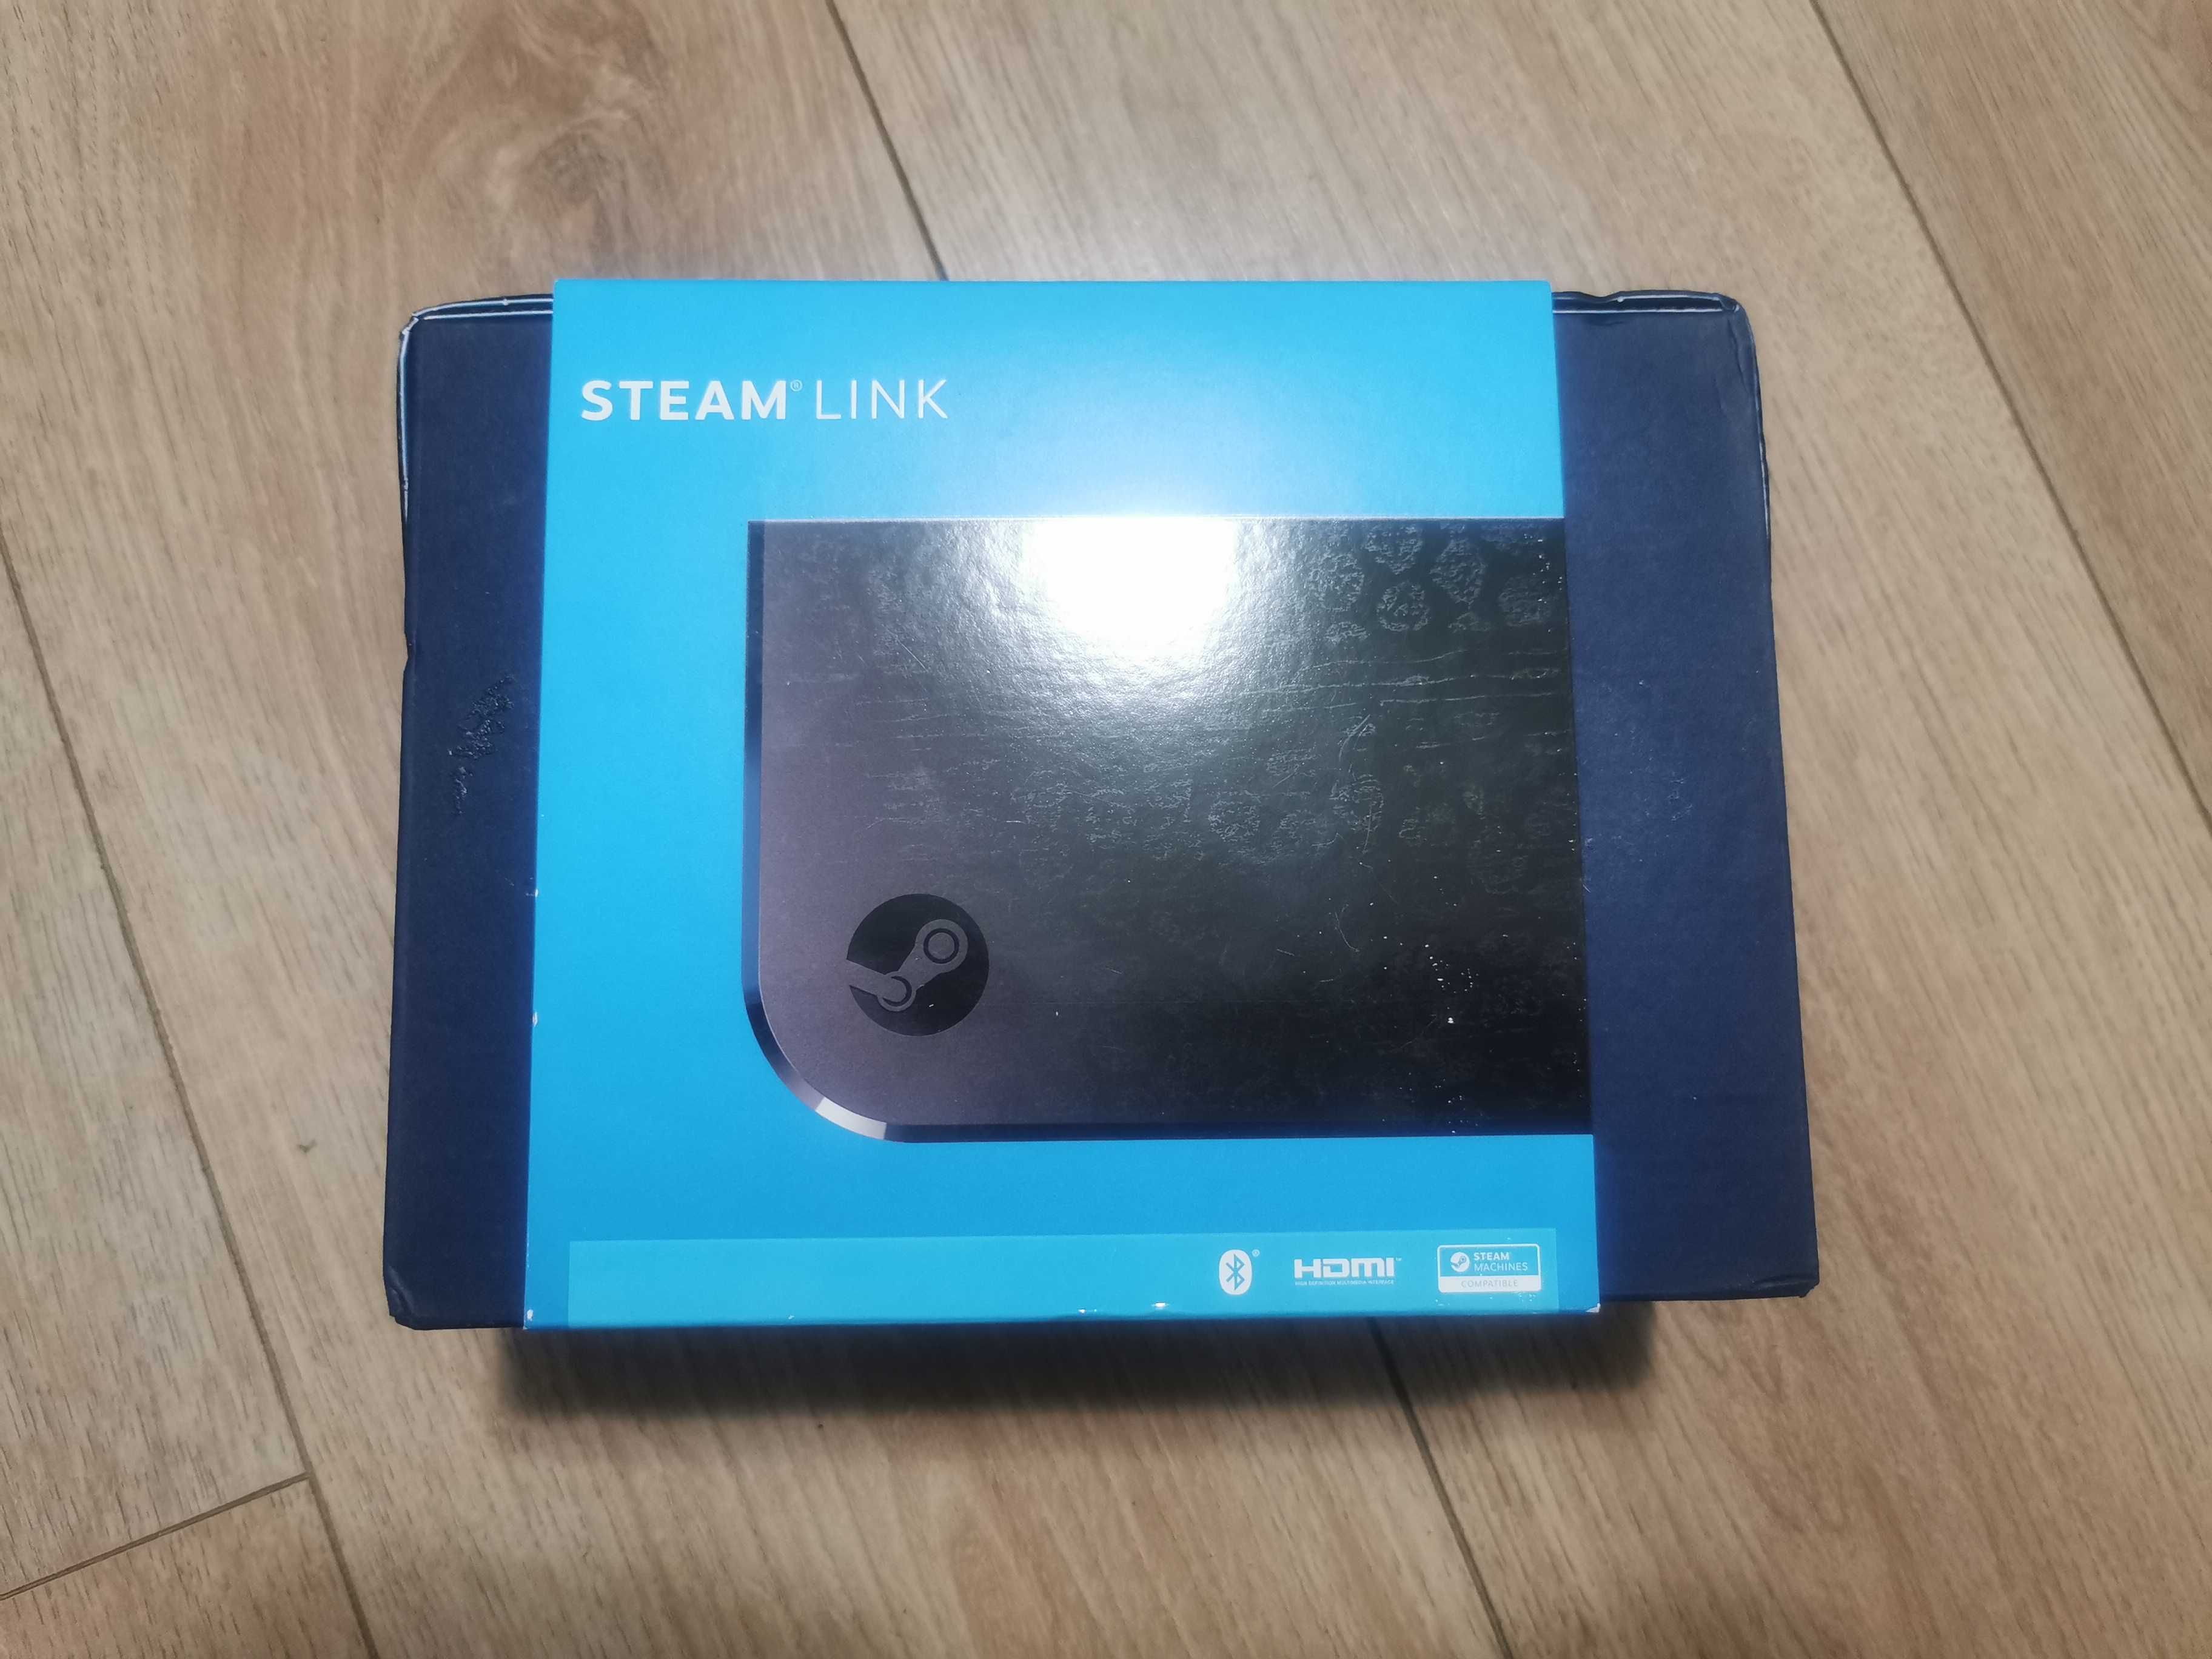 SteamLink by Valve